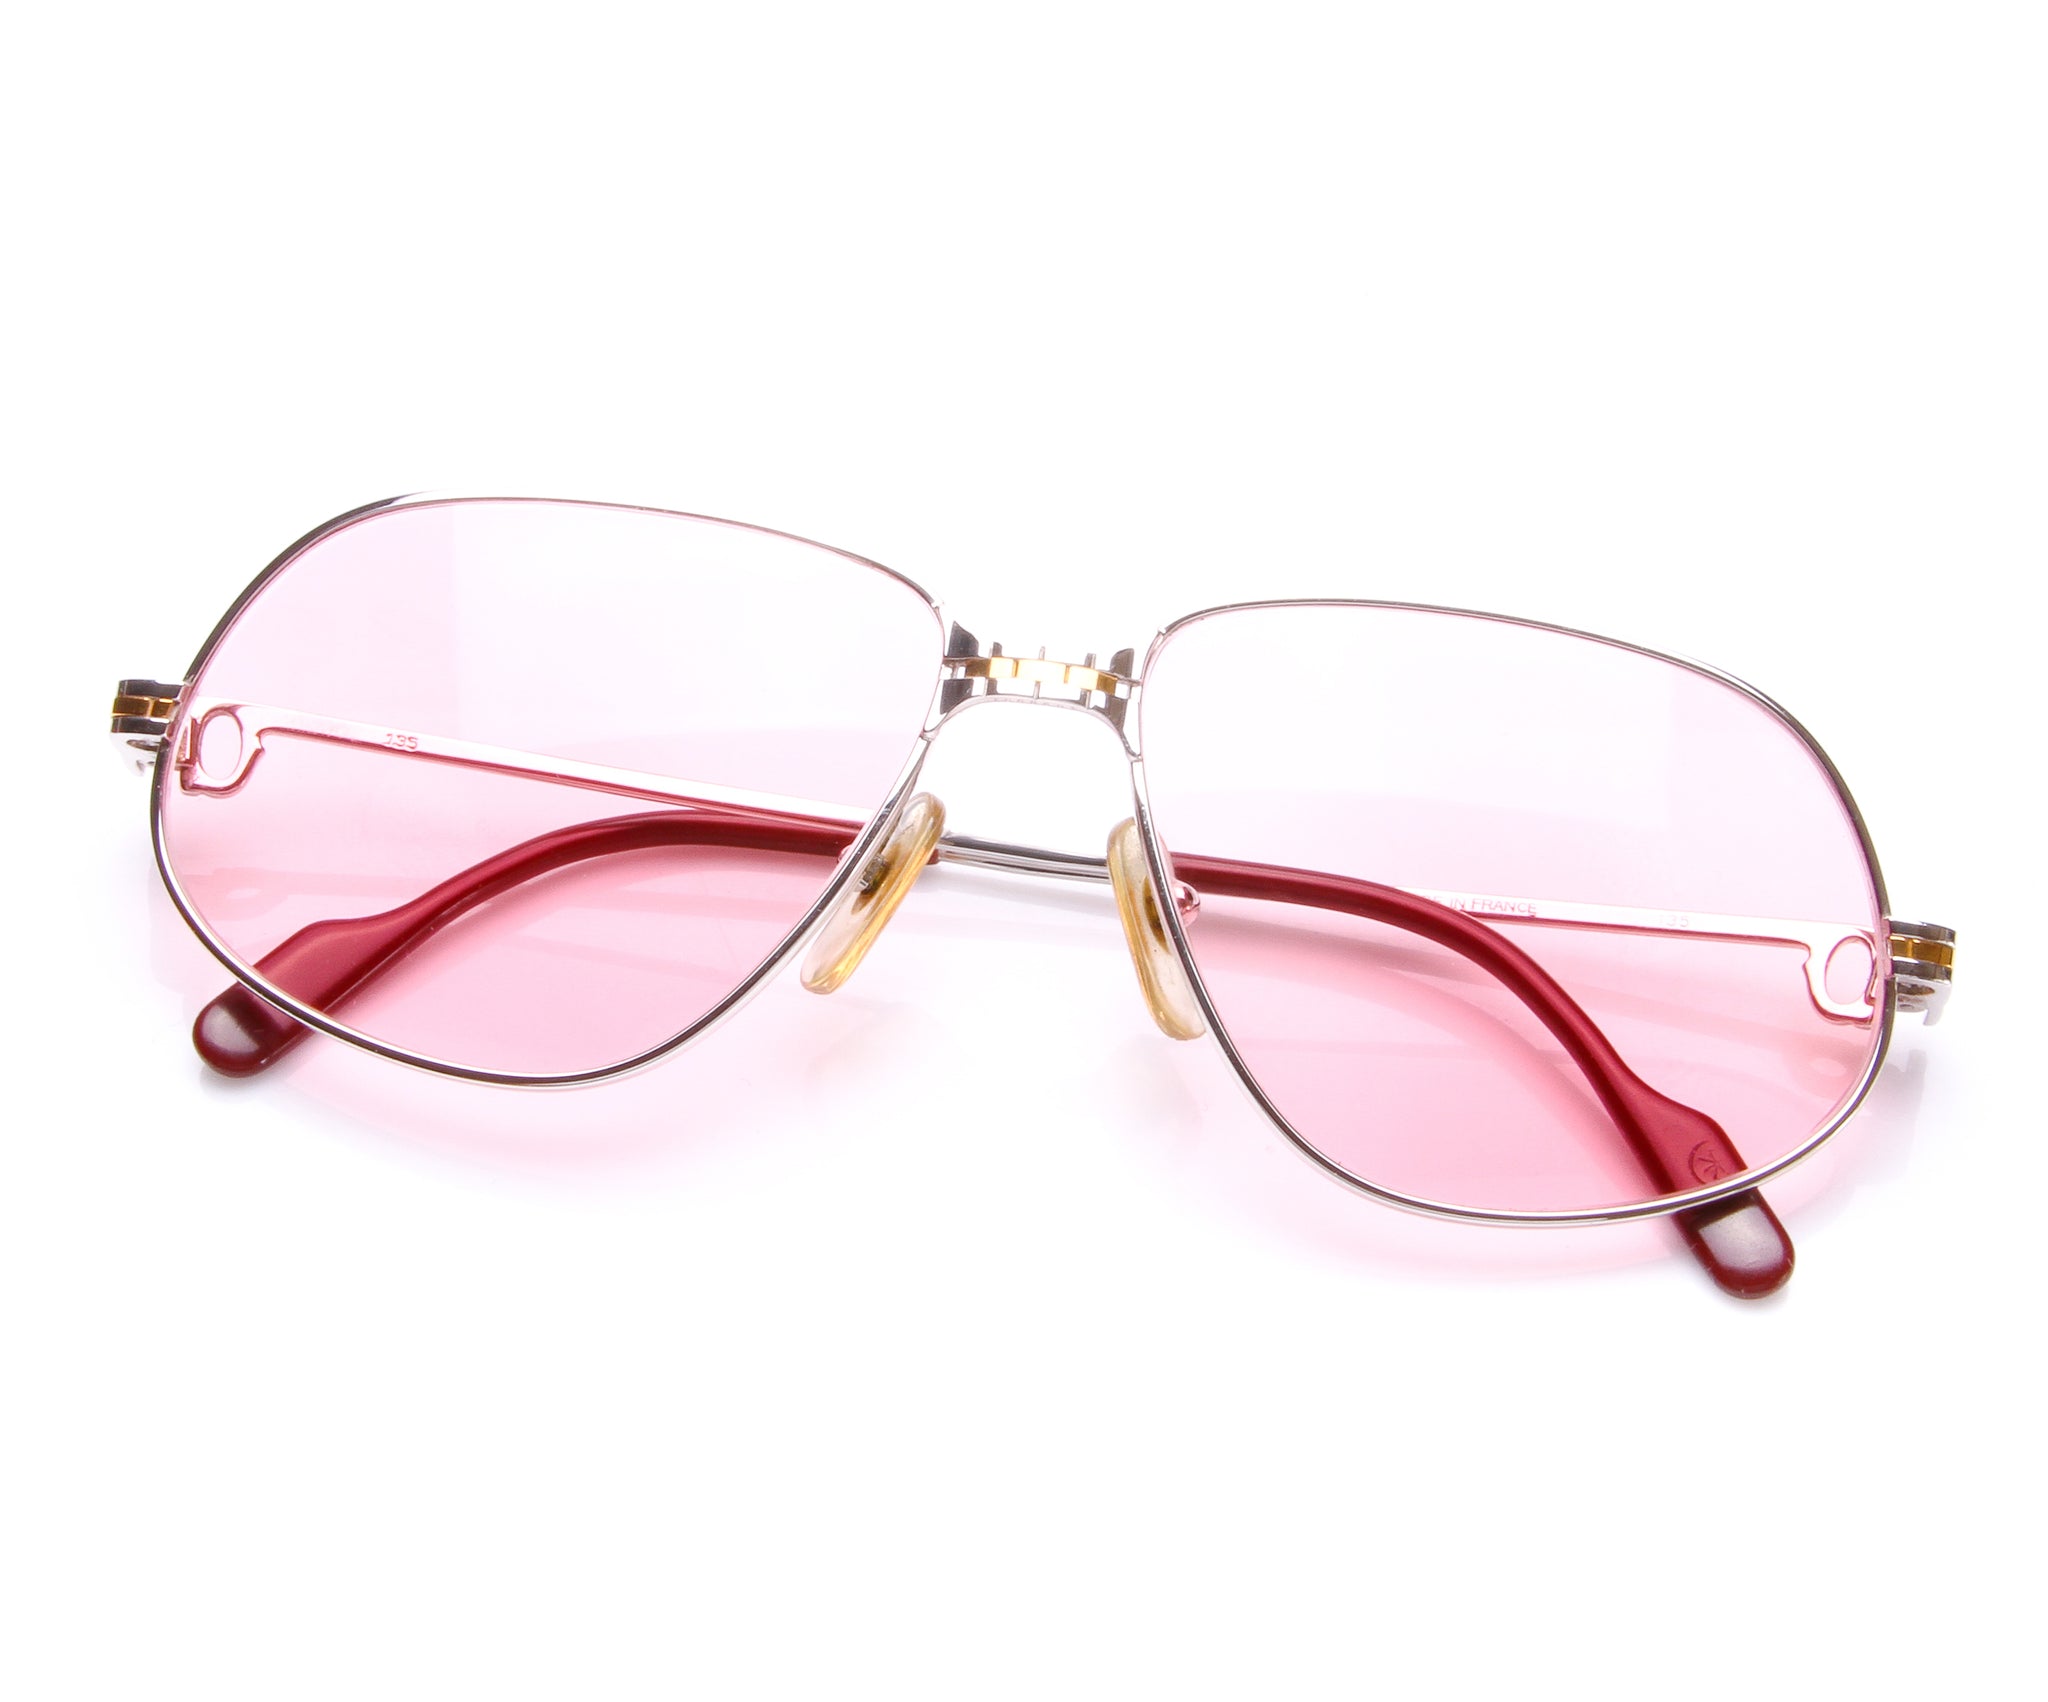 cartier glasses 138